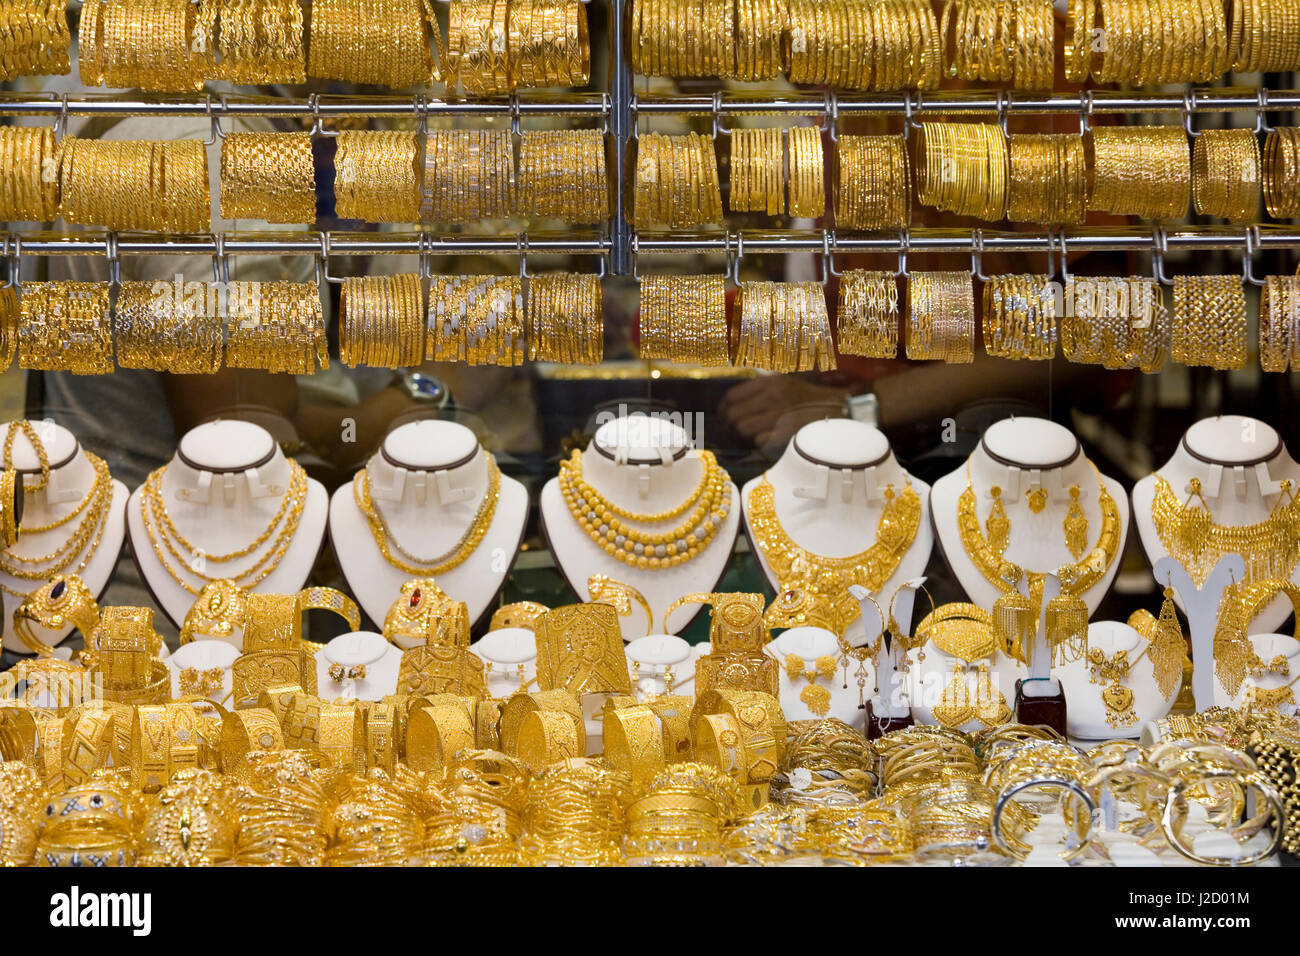 Golden Jewelry for sale, Dubai, United Arab Emirates Stock Photo - Alamy